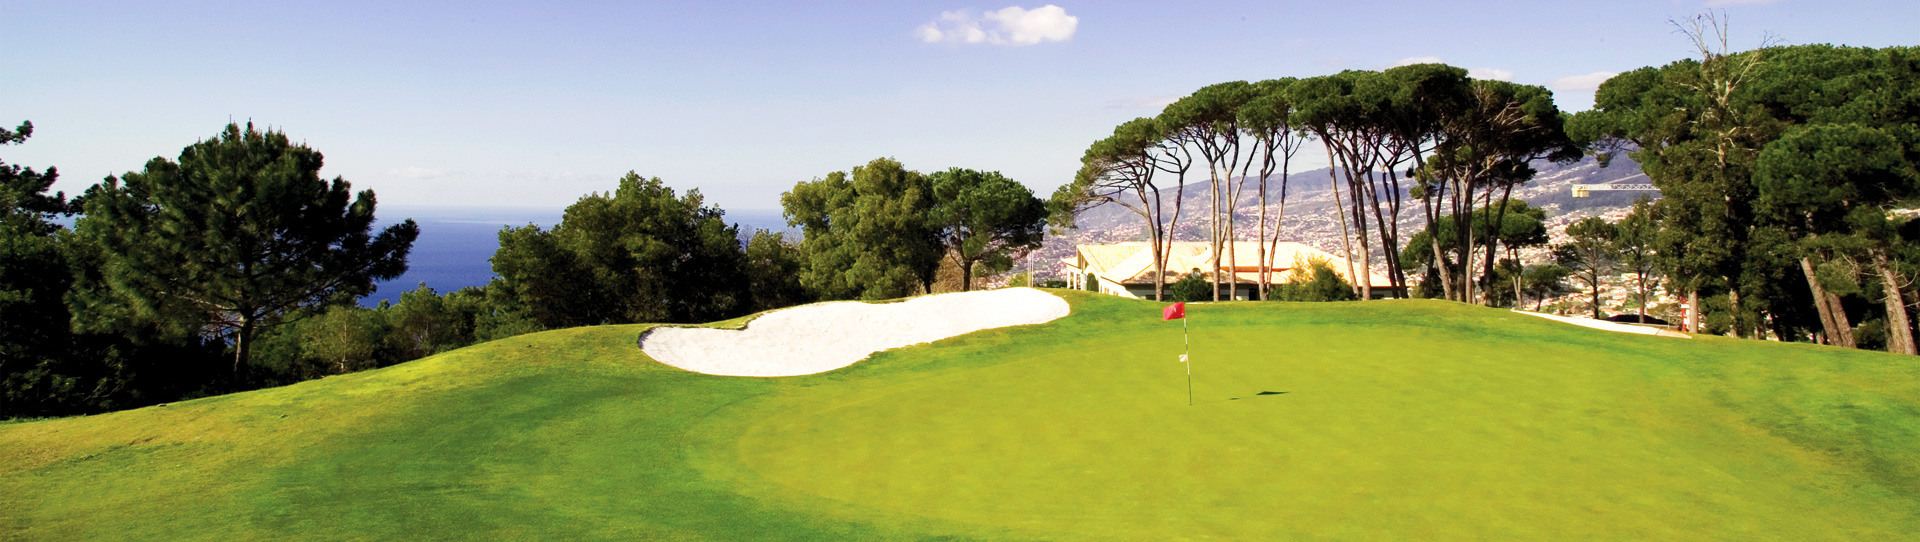 Portugal golf holidays - Palheiro Unlimited Golf 7 days - Photo 1